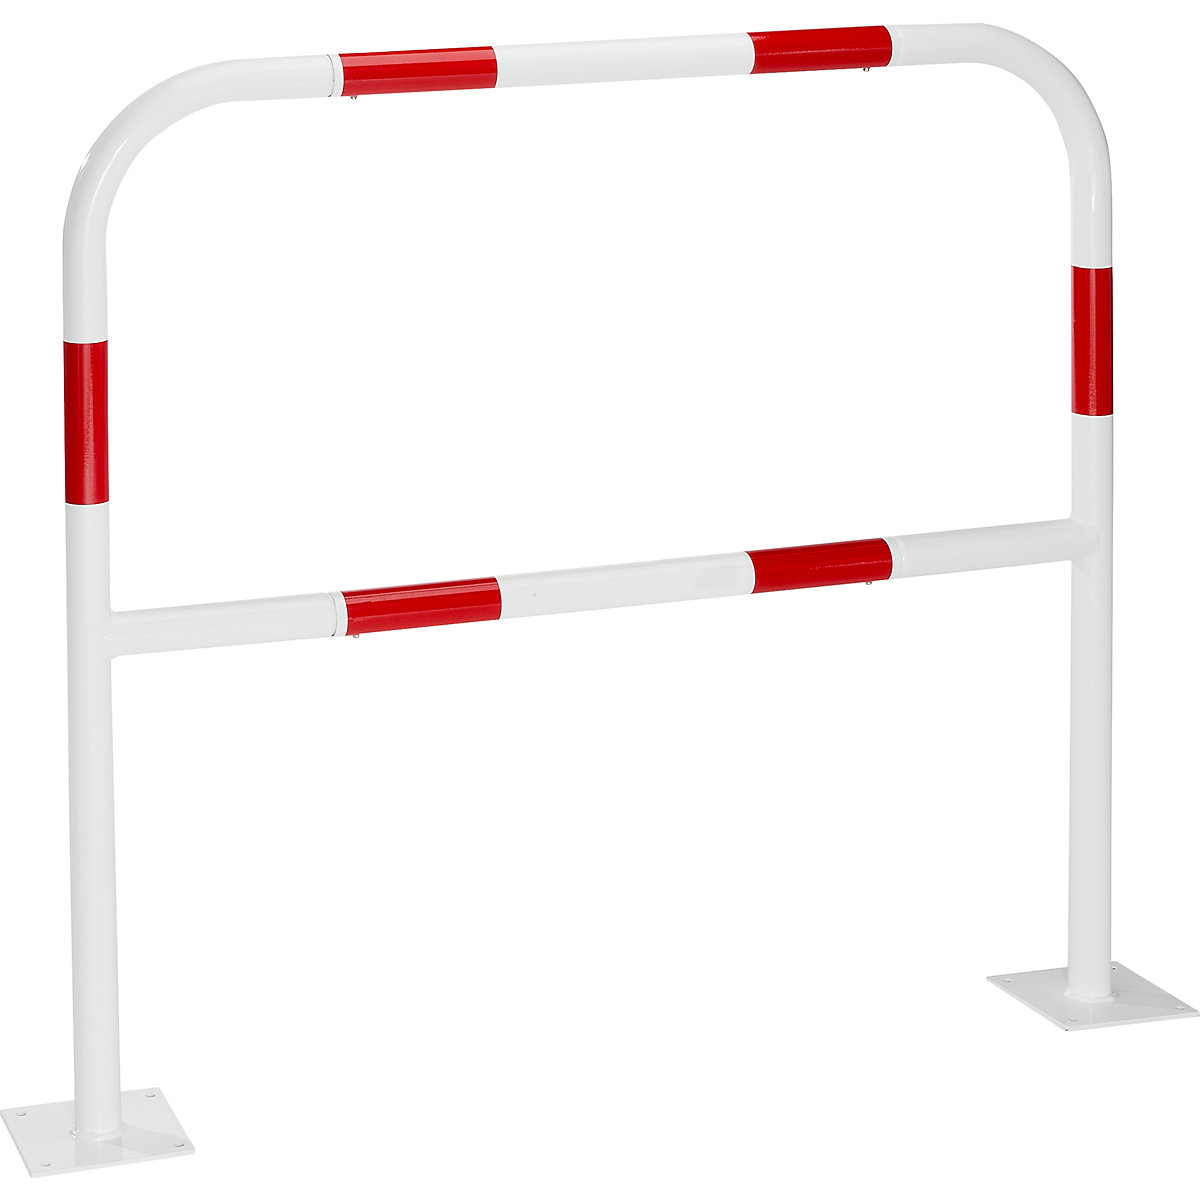 Arco de seguridad para zonas peligrosas, para atornillar, rojo / blanco, anchura 1000 mm-13